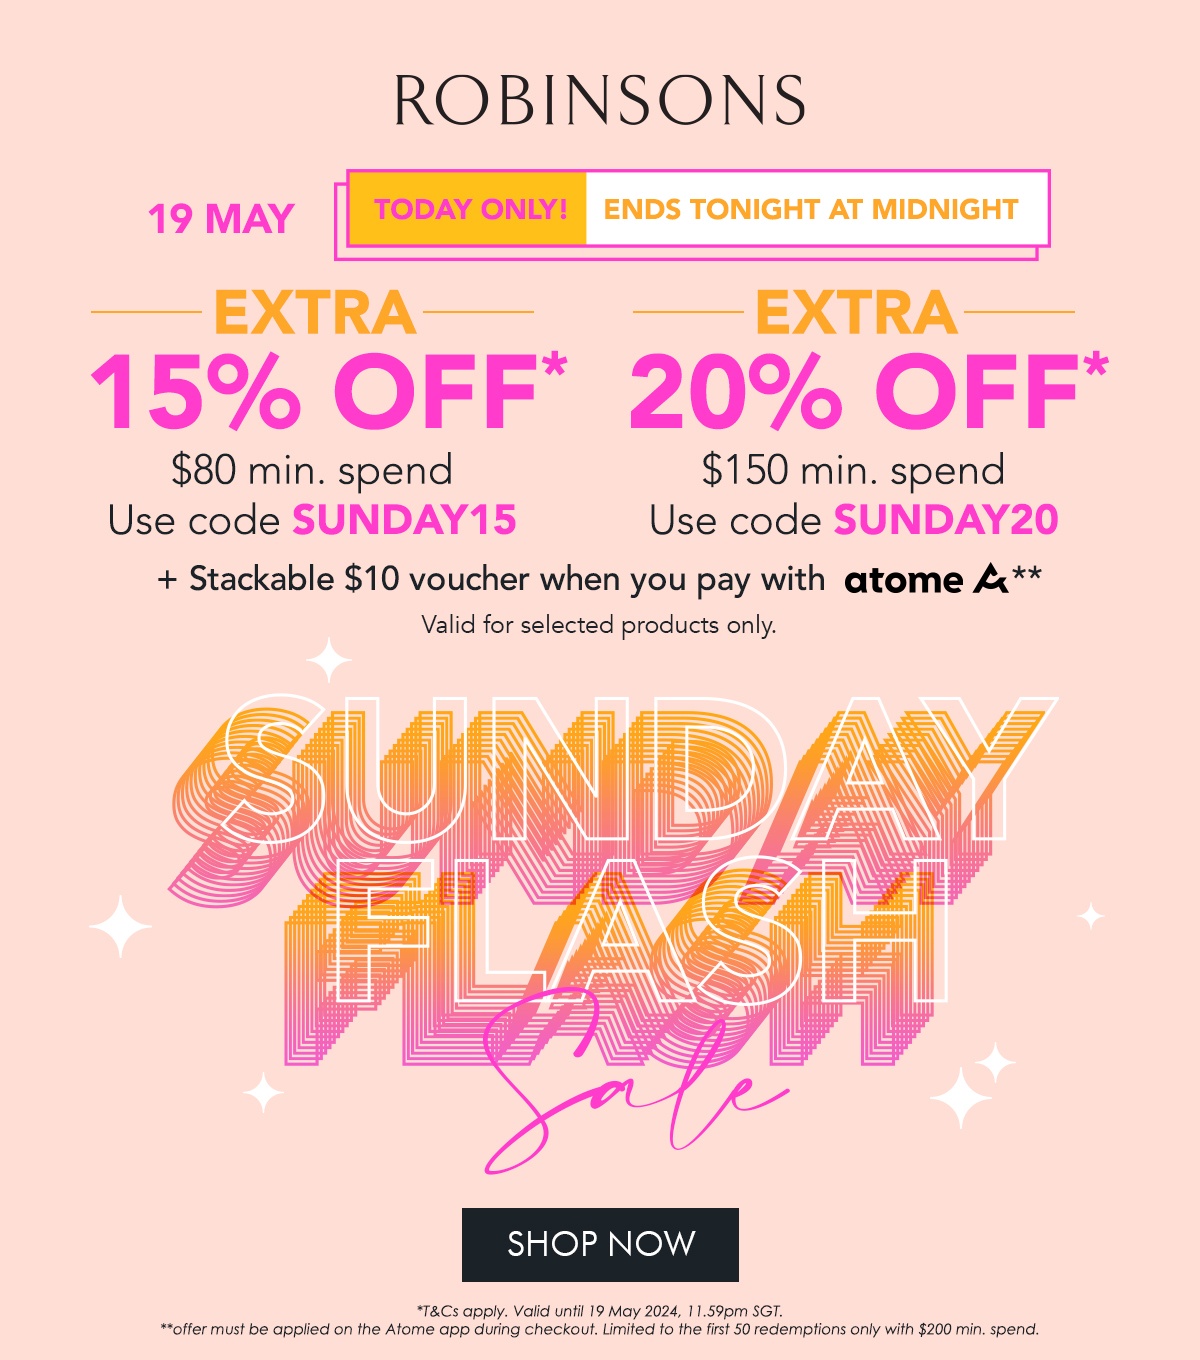 Sunday Flash Sale